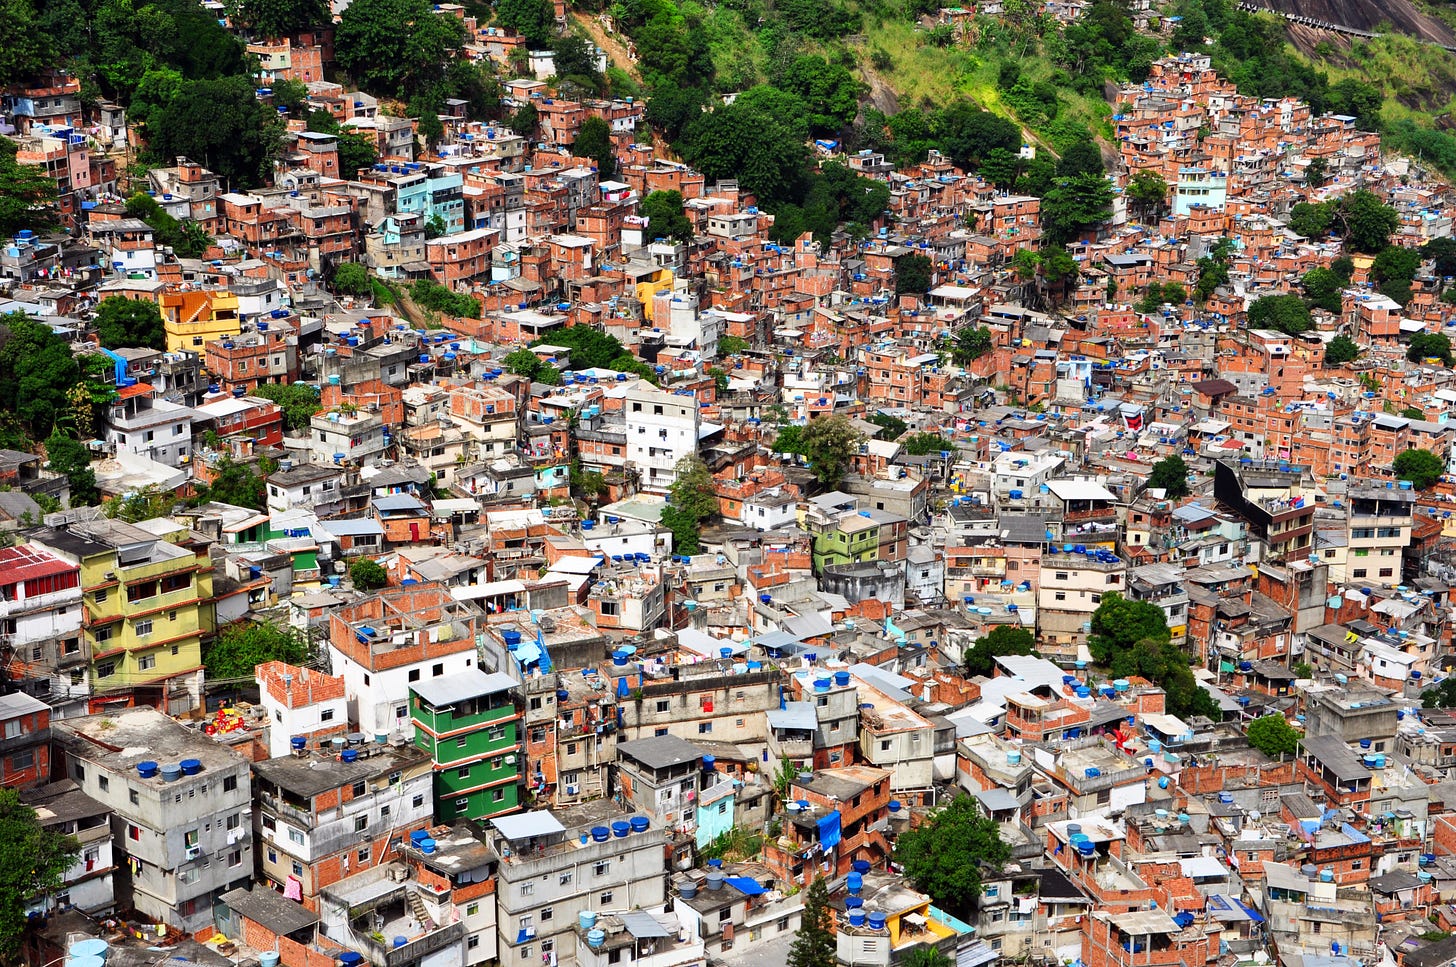 Favela - Wikipedia